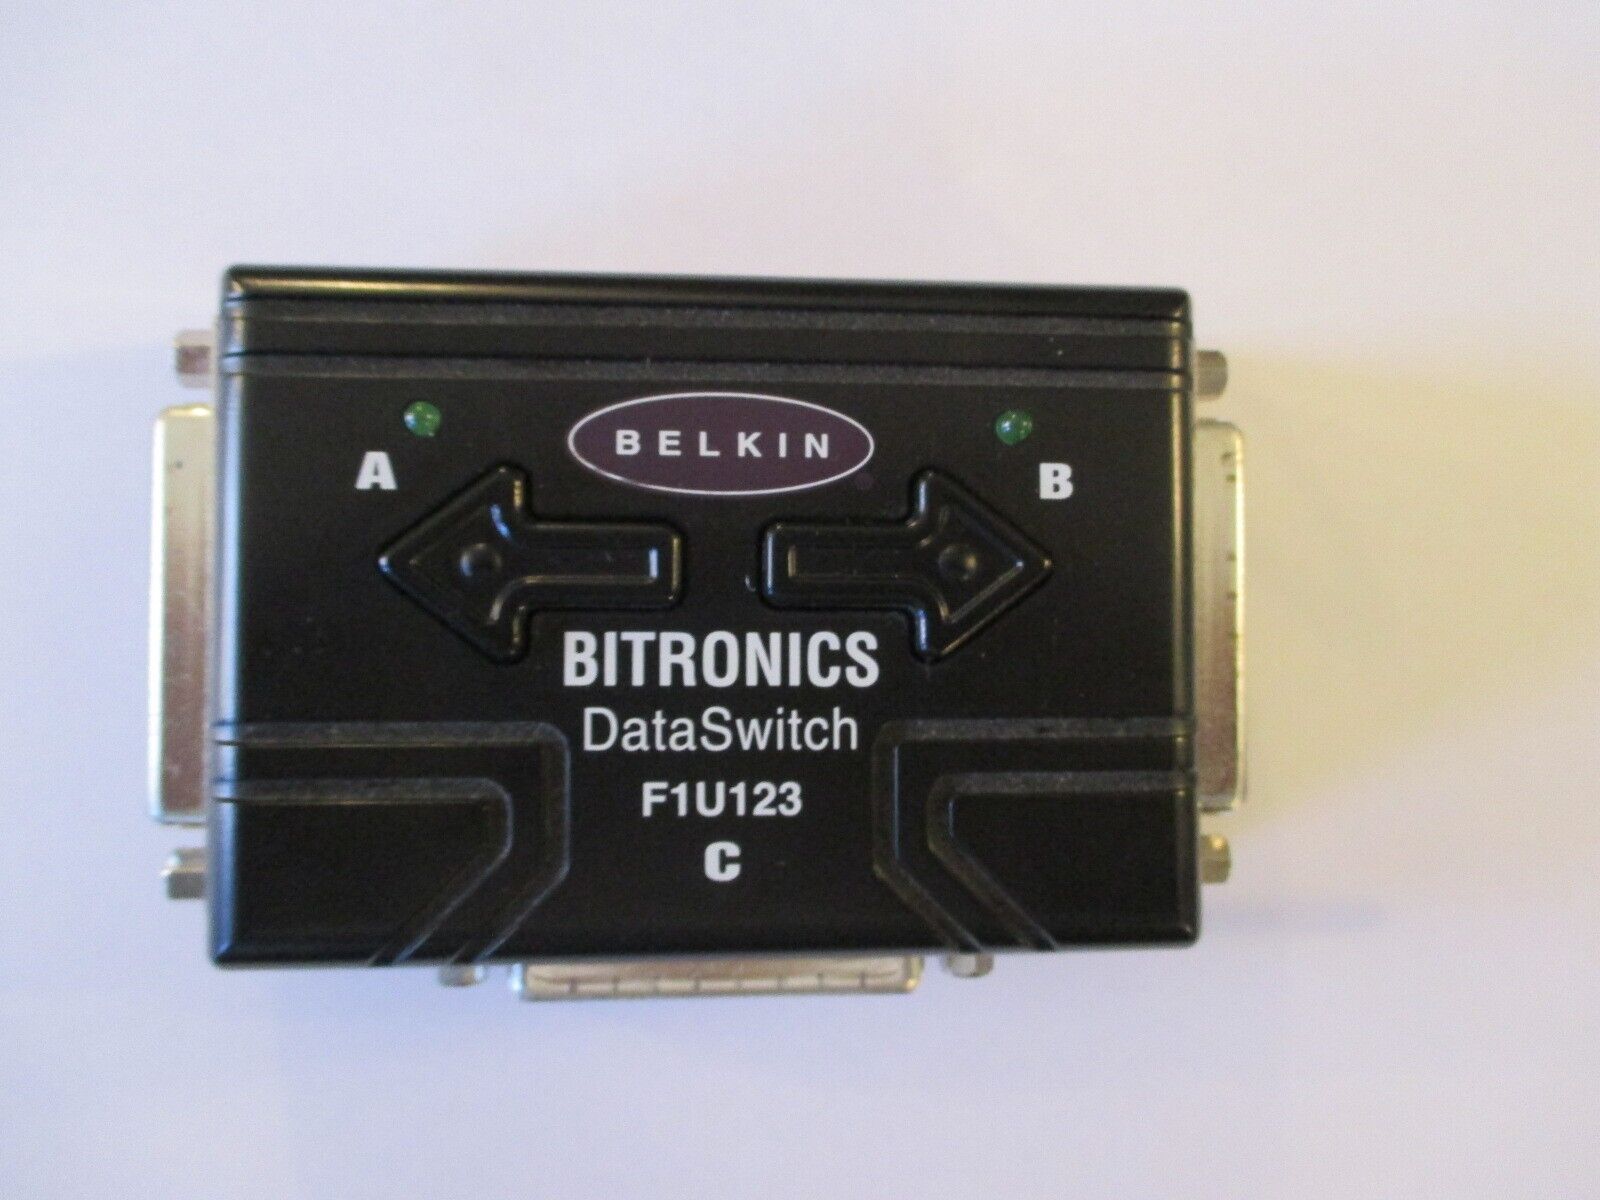 Belkin Bitronics F1U123 Data Switch